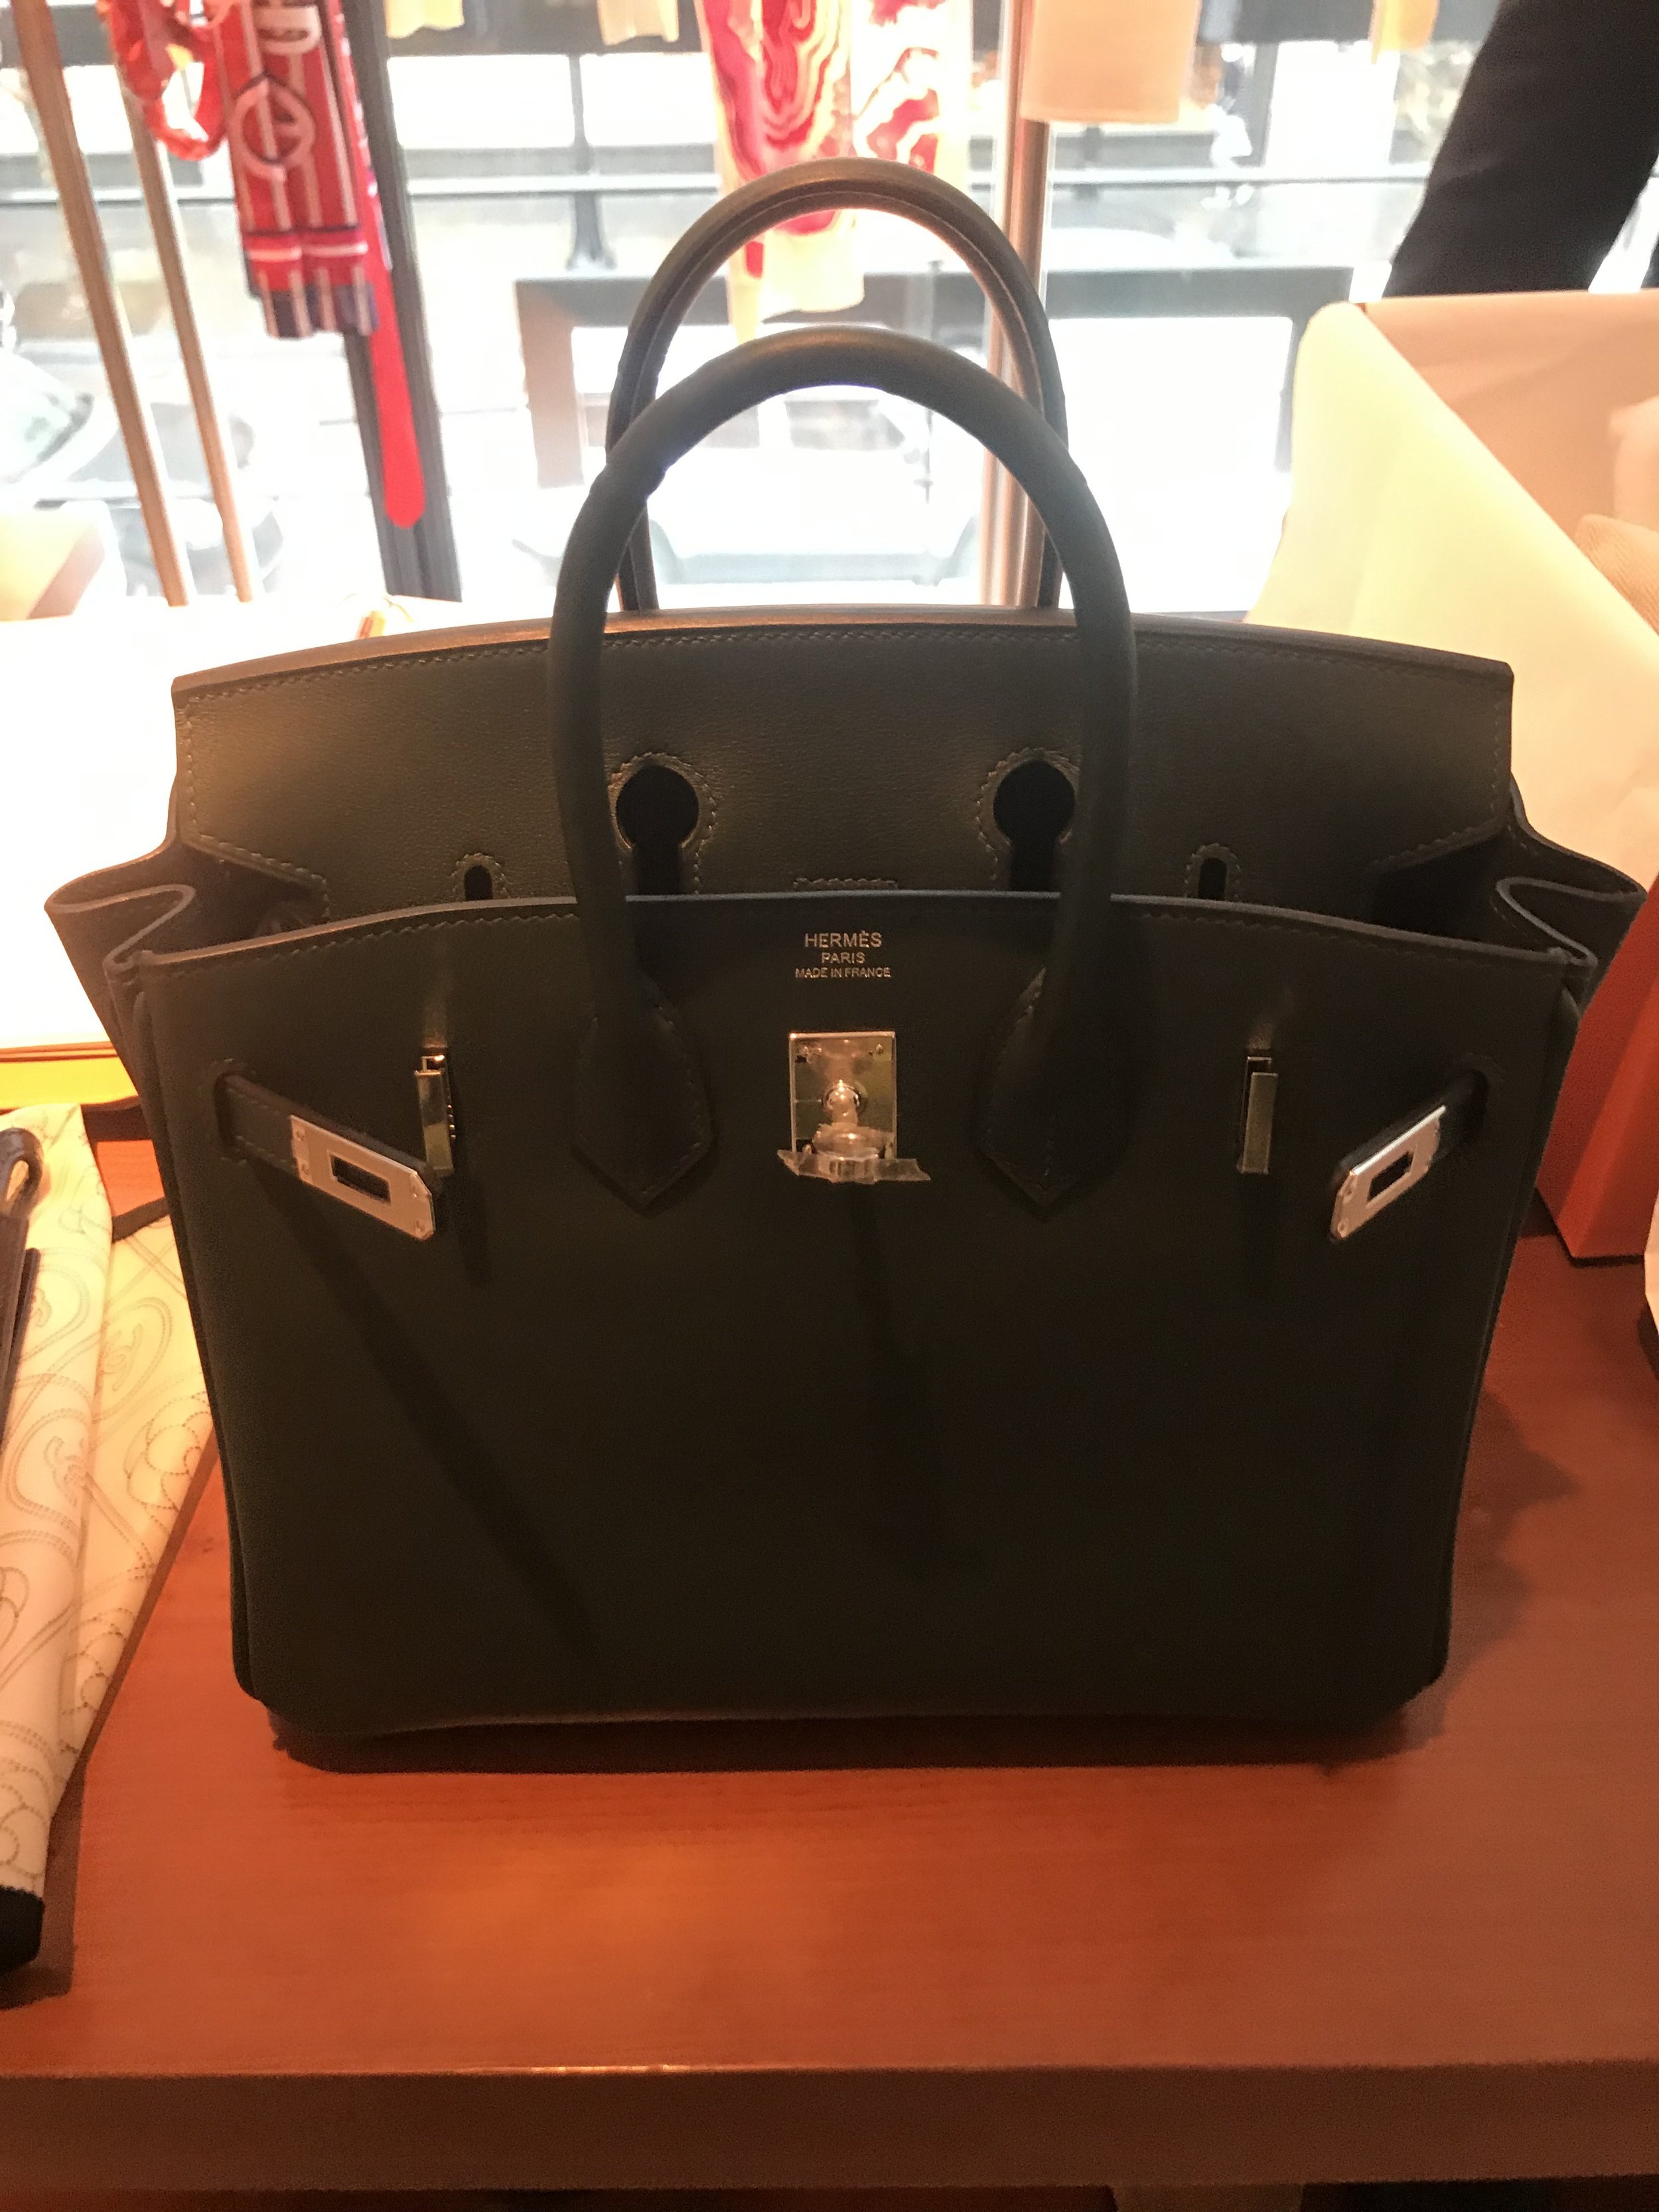 Hermes Birkin Bag Price List 2019 